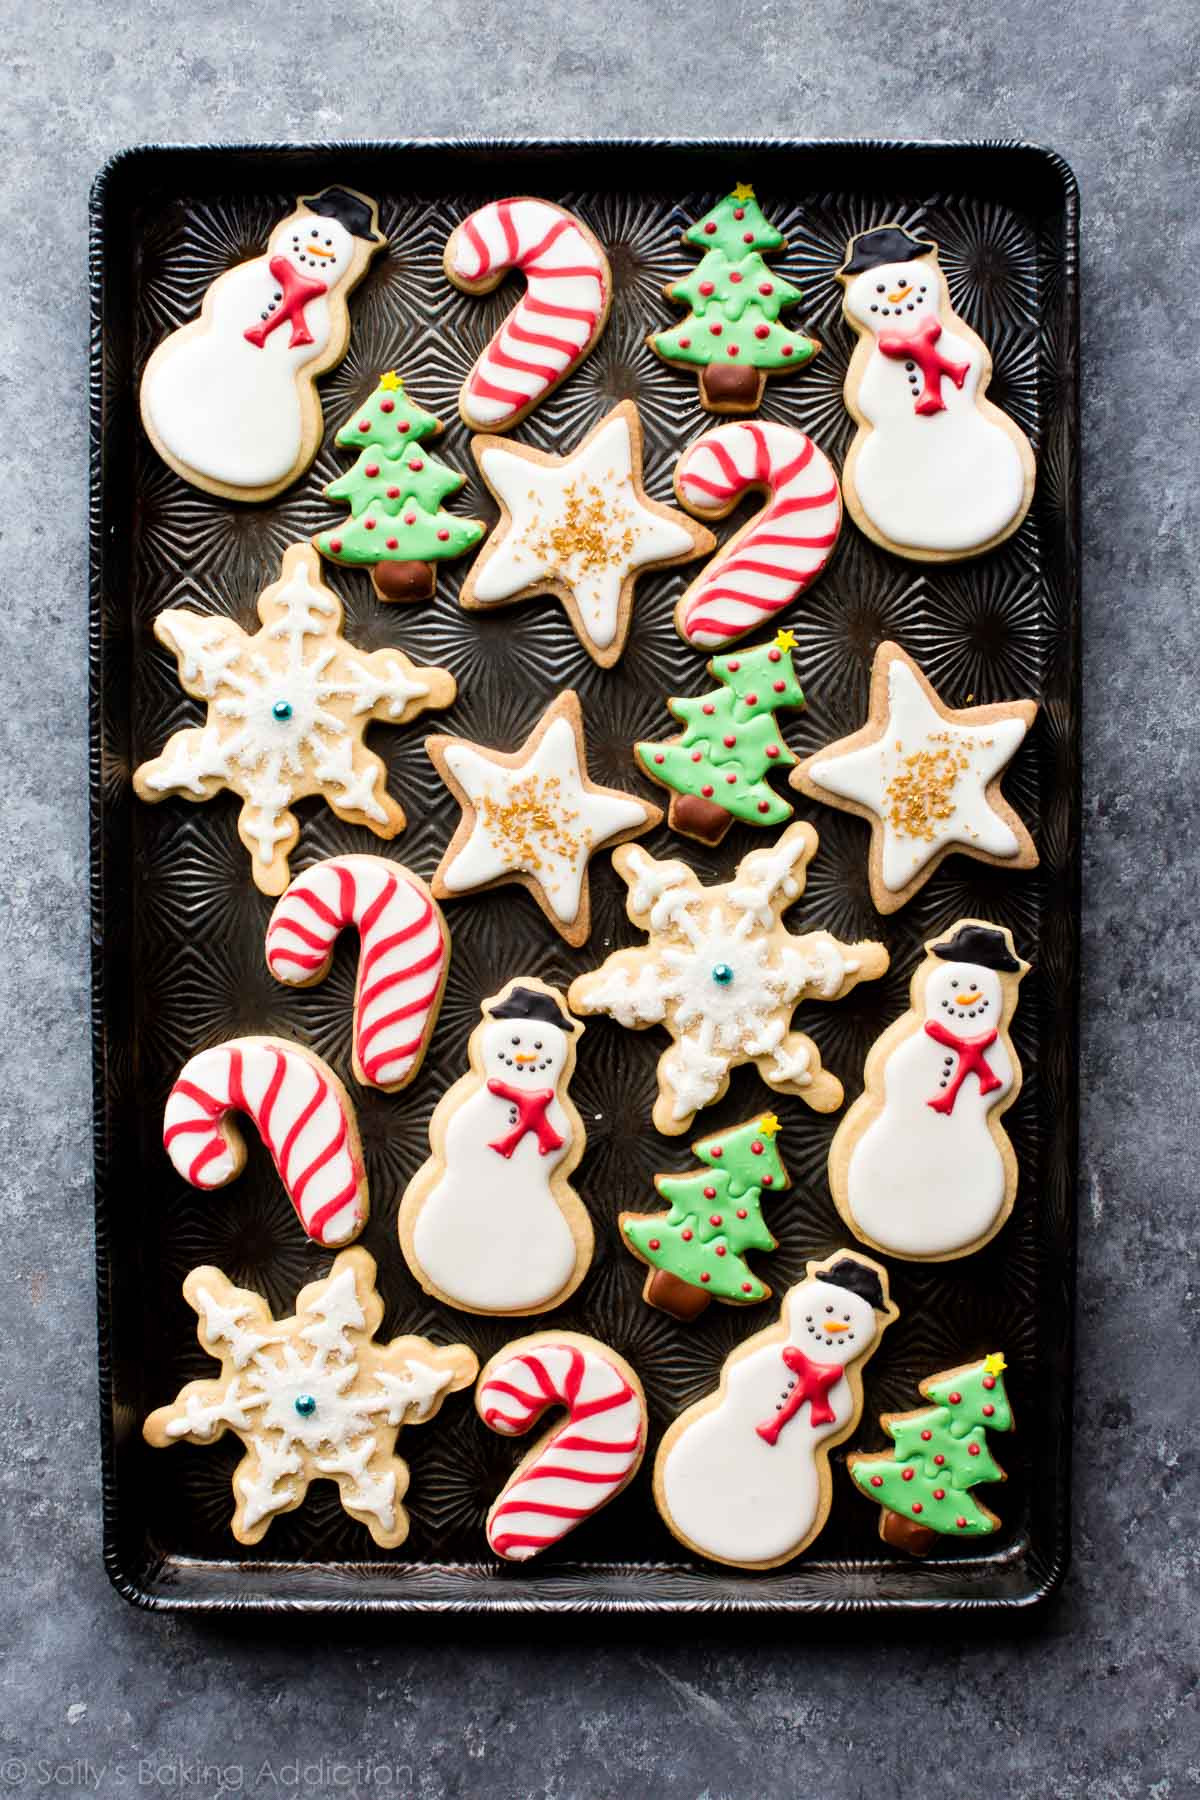 Christmas Cookies Decorating
 1 Sugar Cookie Dough 5 Ways to Decorate Sallys Baking